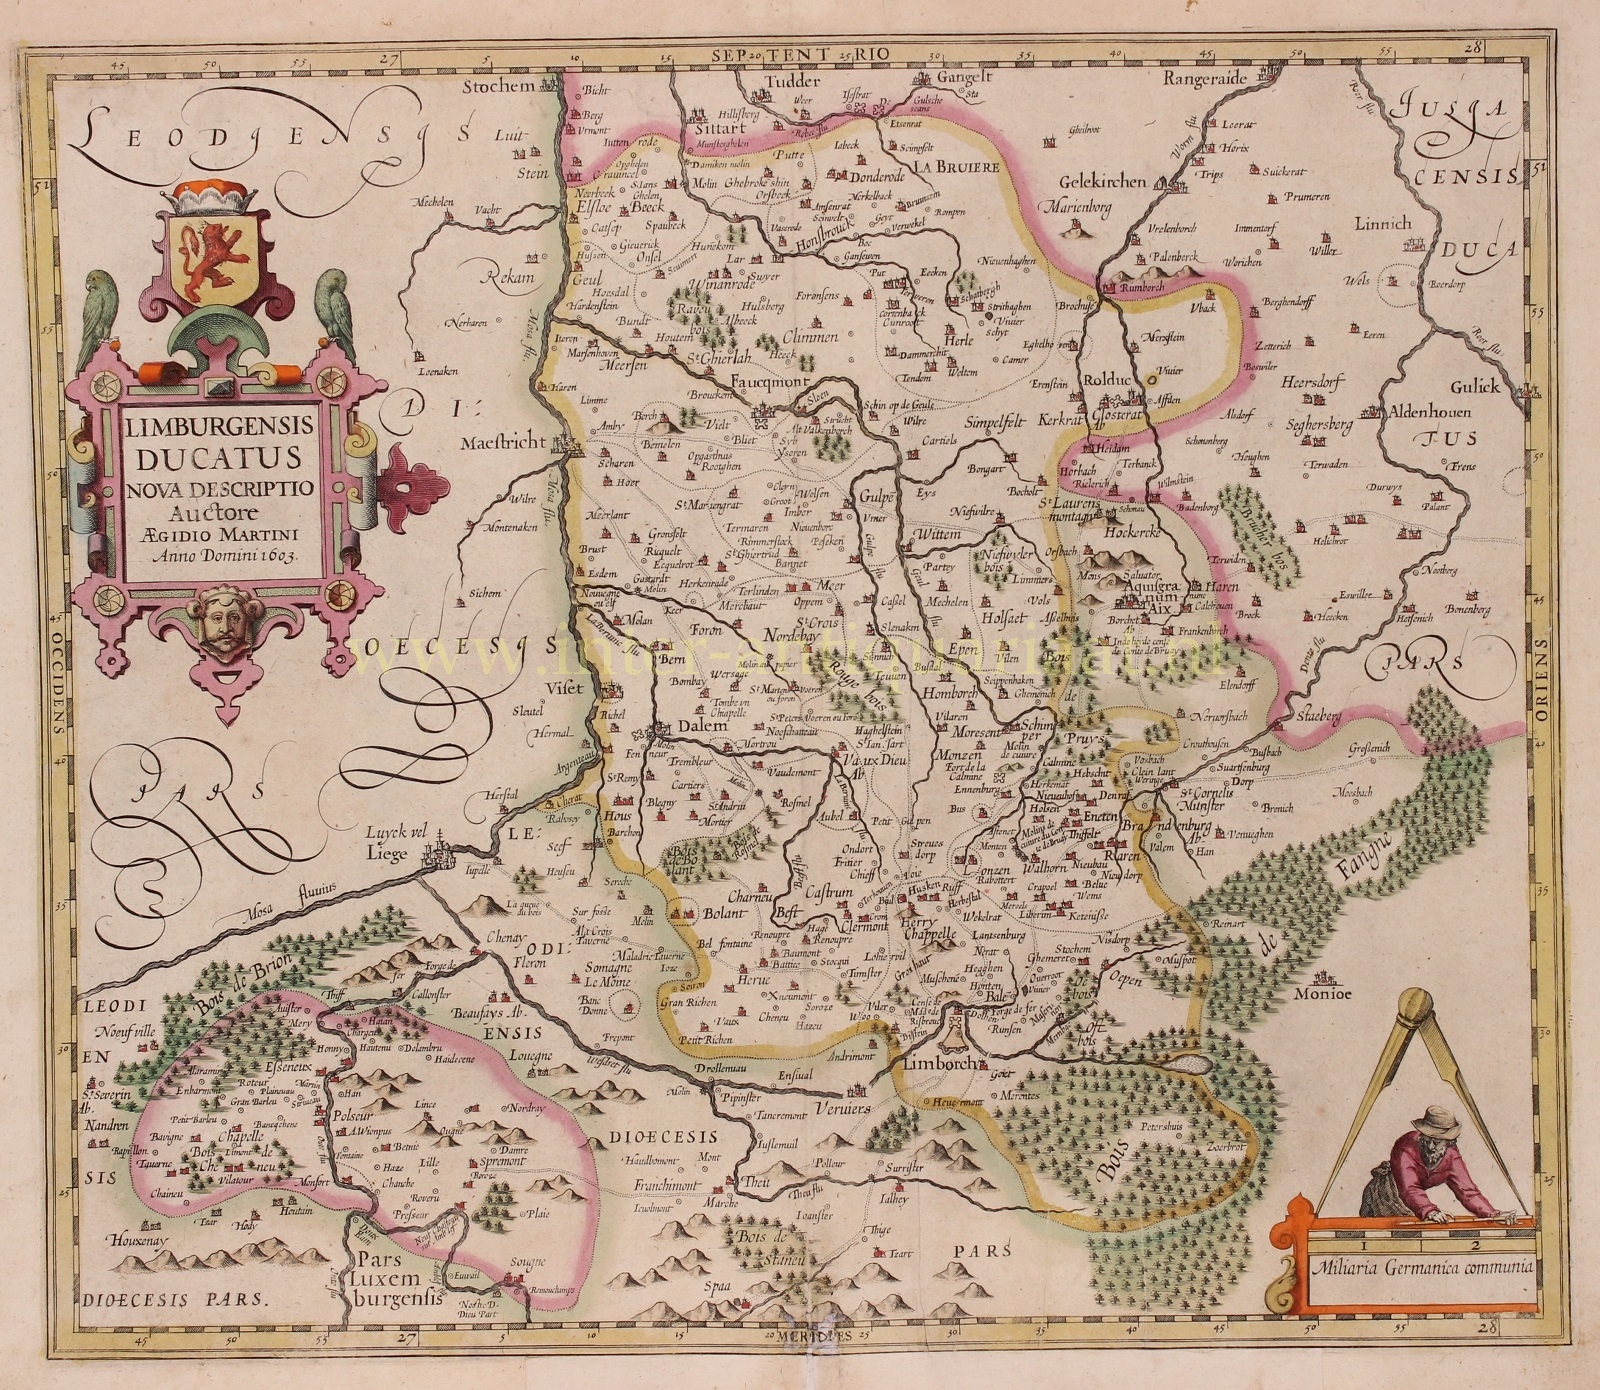 Hondius-- Jodocus - Duchy of Limburg - Mercator/Hondius, c. 1630